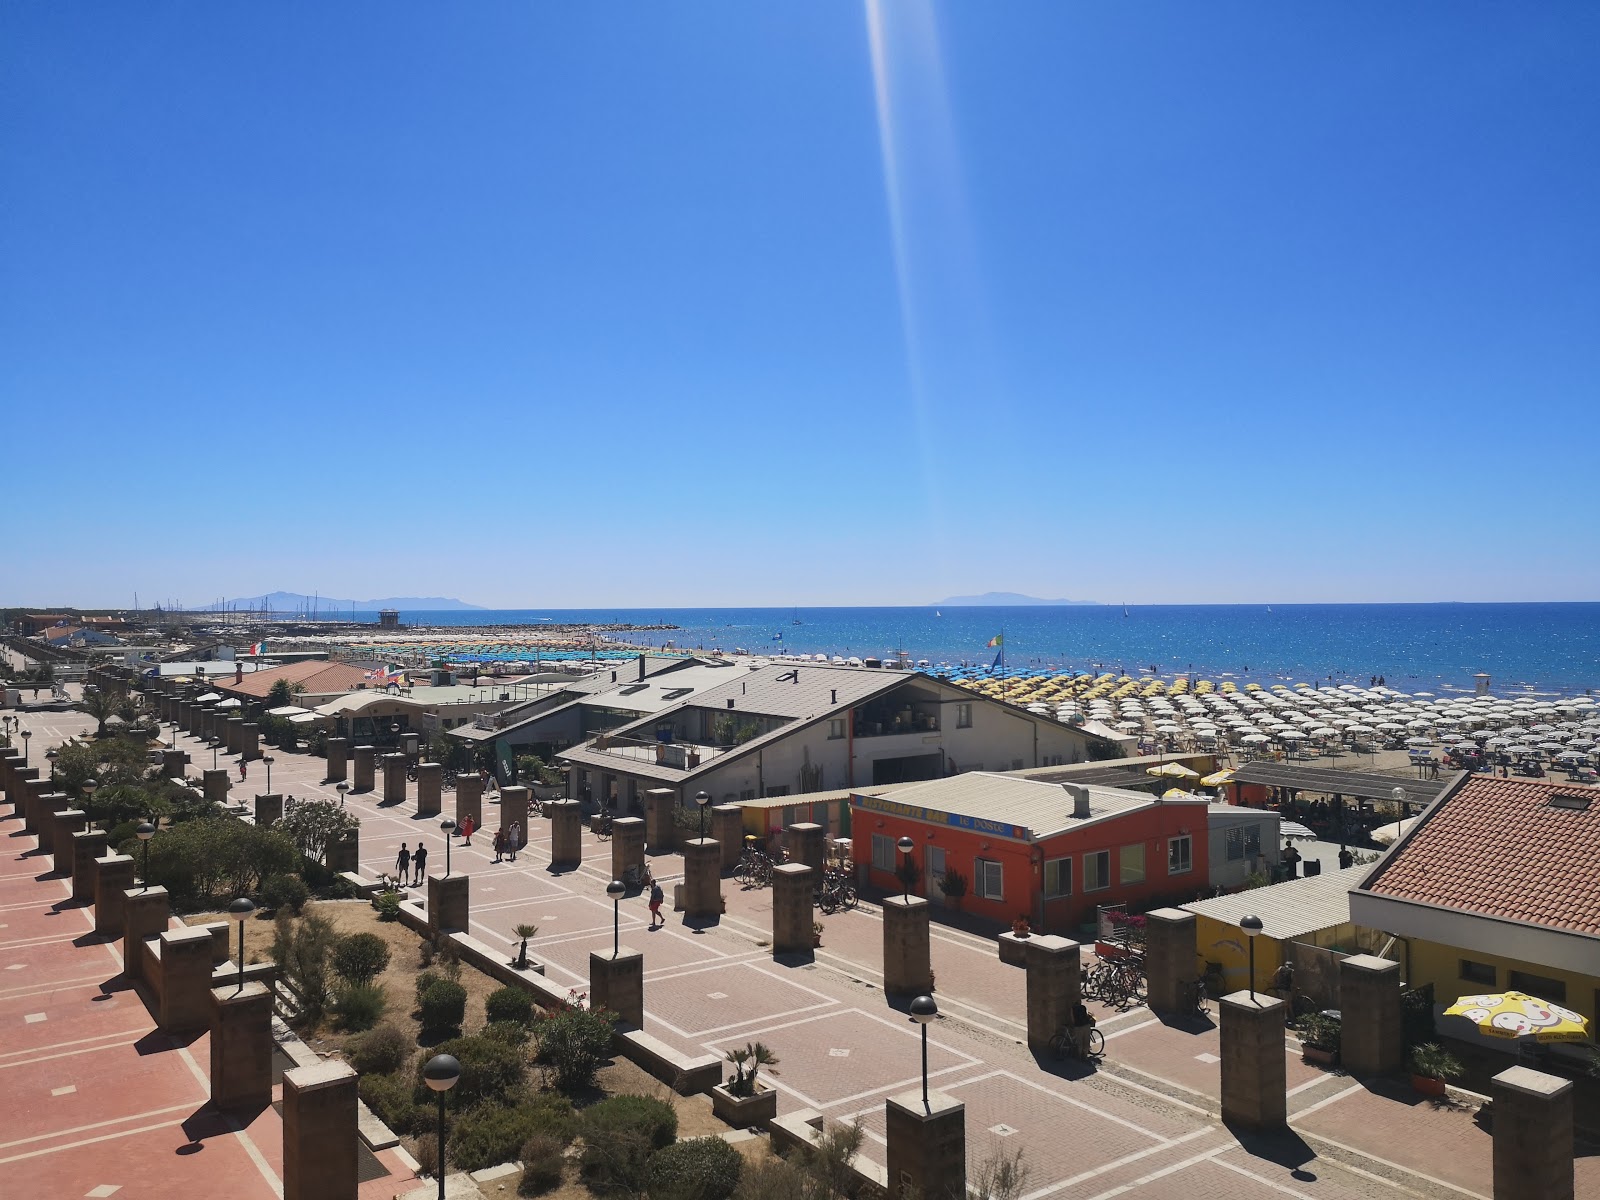 Spiaggia Marina di Grosseto的照片 带有长直海岸